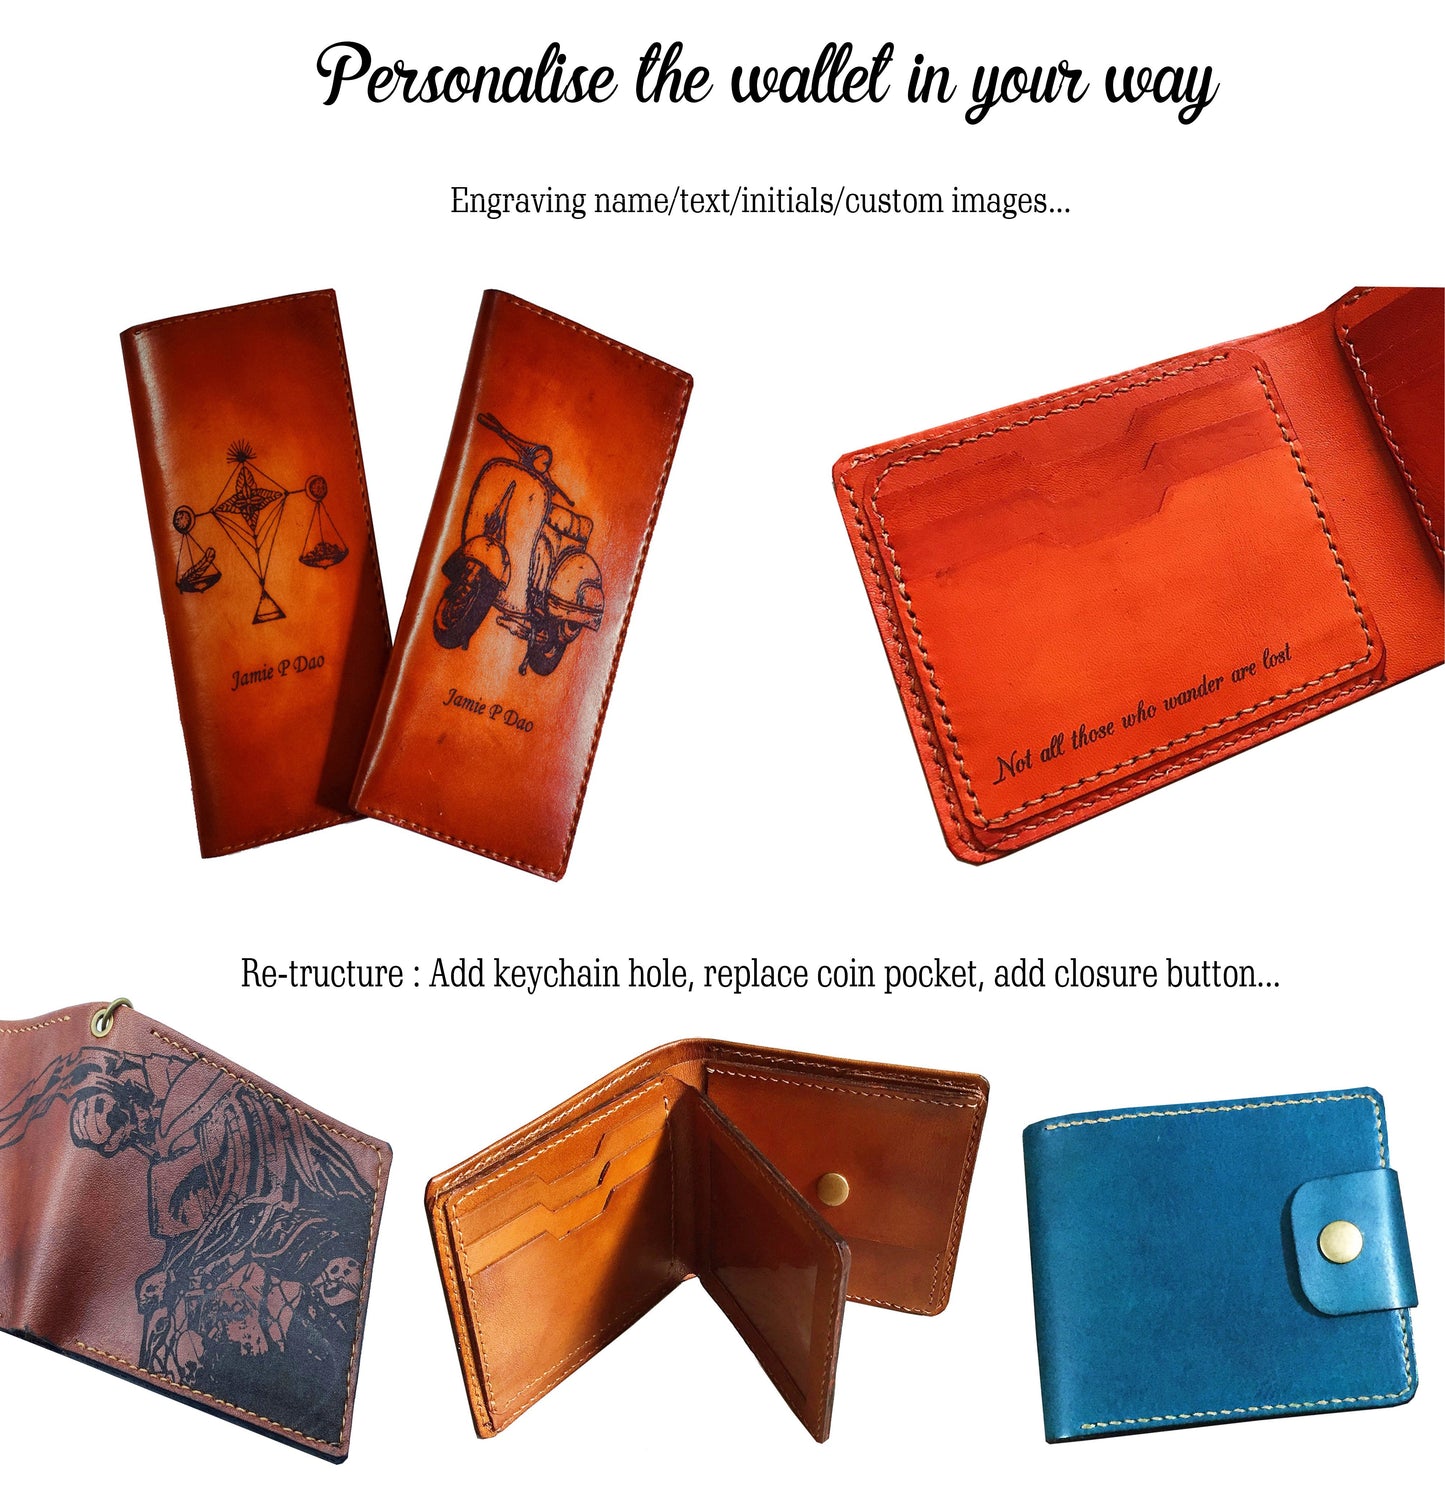 Mayan Corner - Starwars villains dark side personalized leather handmade men's wallet, custom anniversary gifts for him, Father boyfriend brother special present